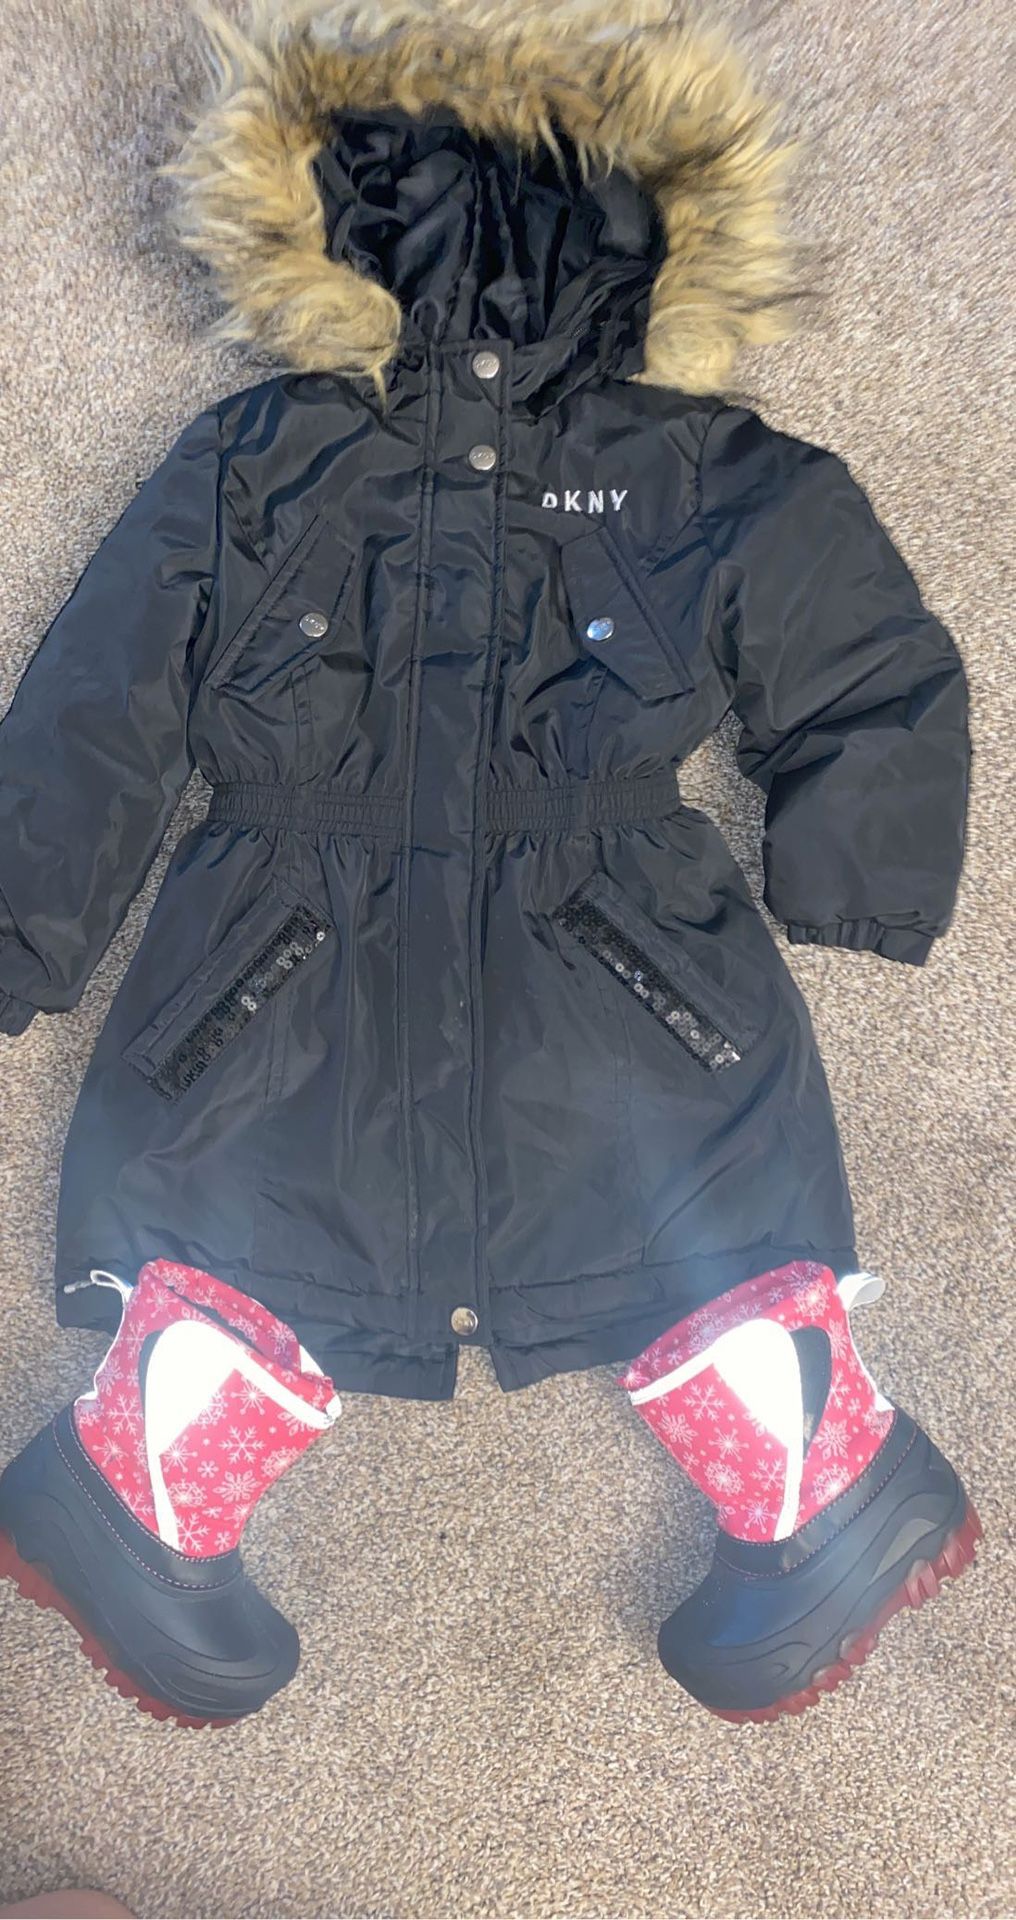 Snow Boots & Jacket